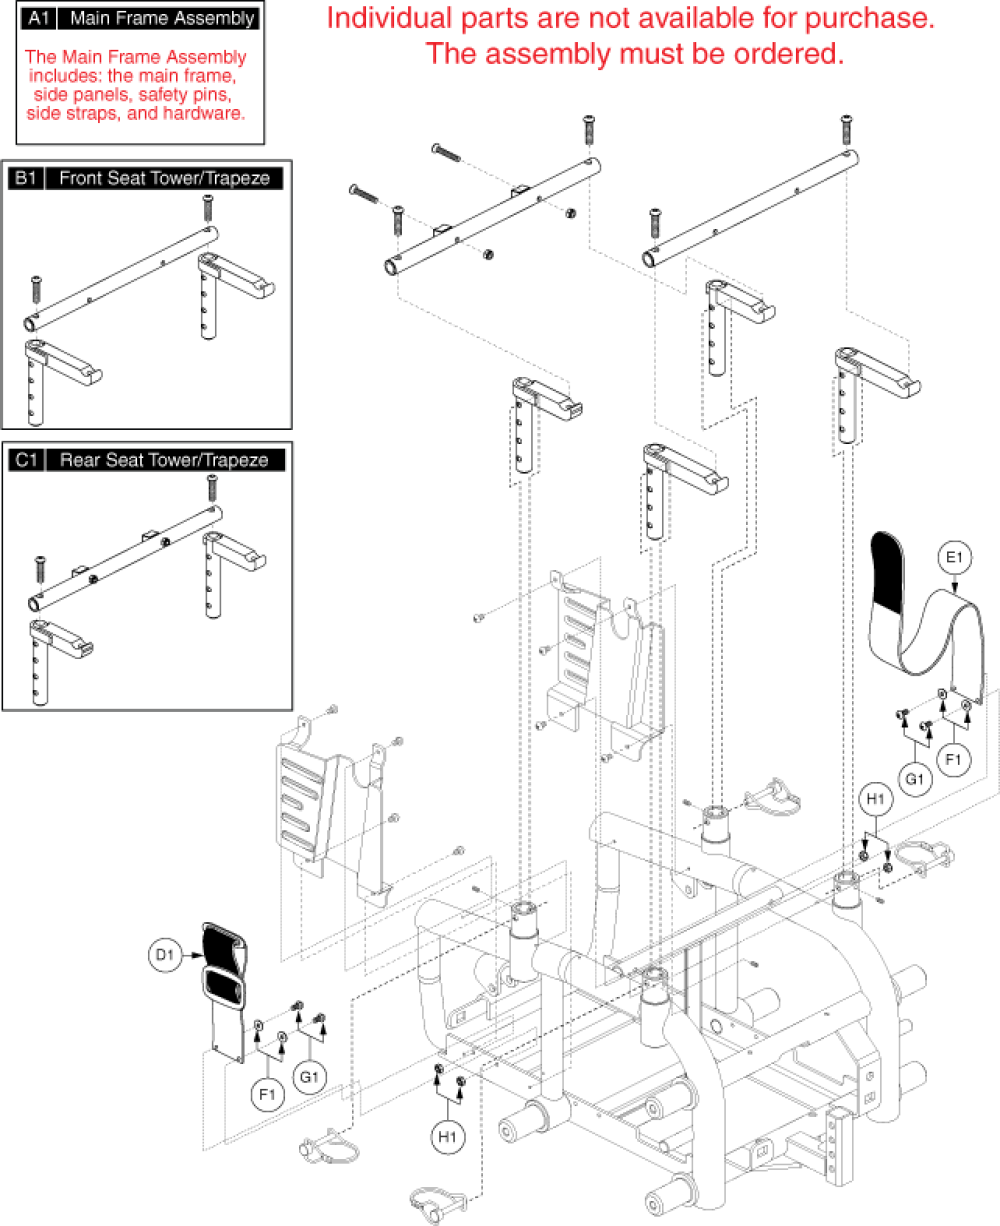 Main Frame Assembly - Generation 2 parts diagram